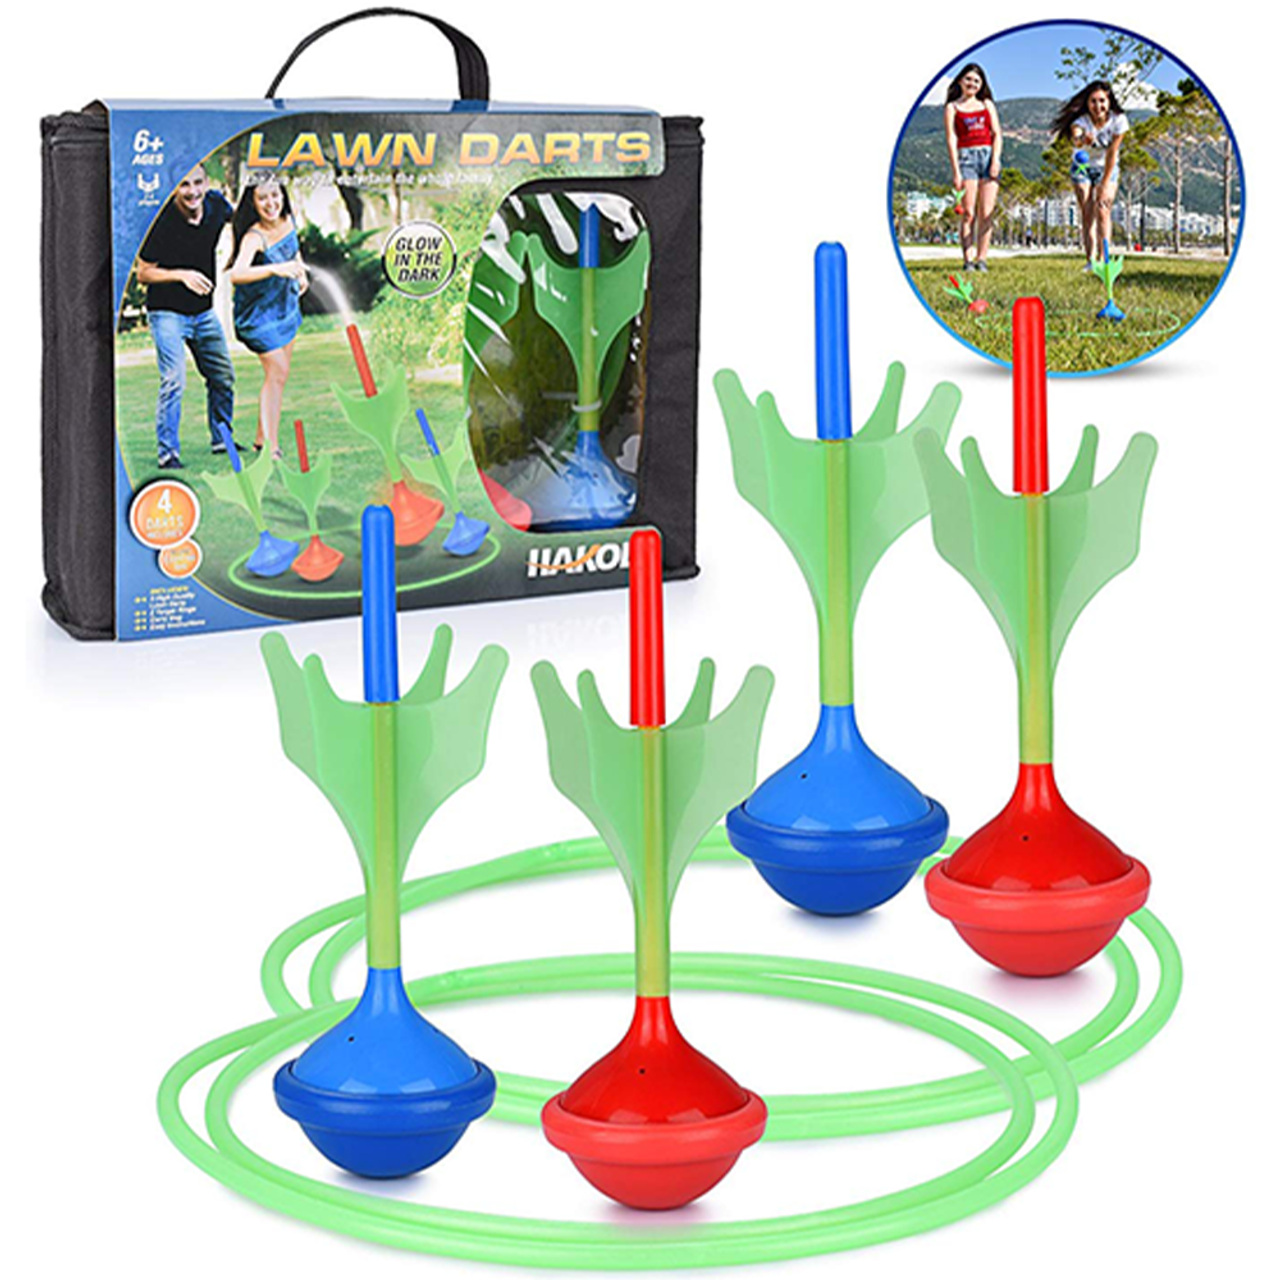 Hakol® Glow-in-the-Dark Lawn Darts Game product image